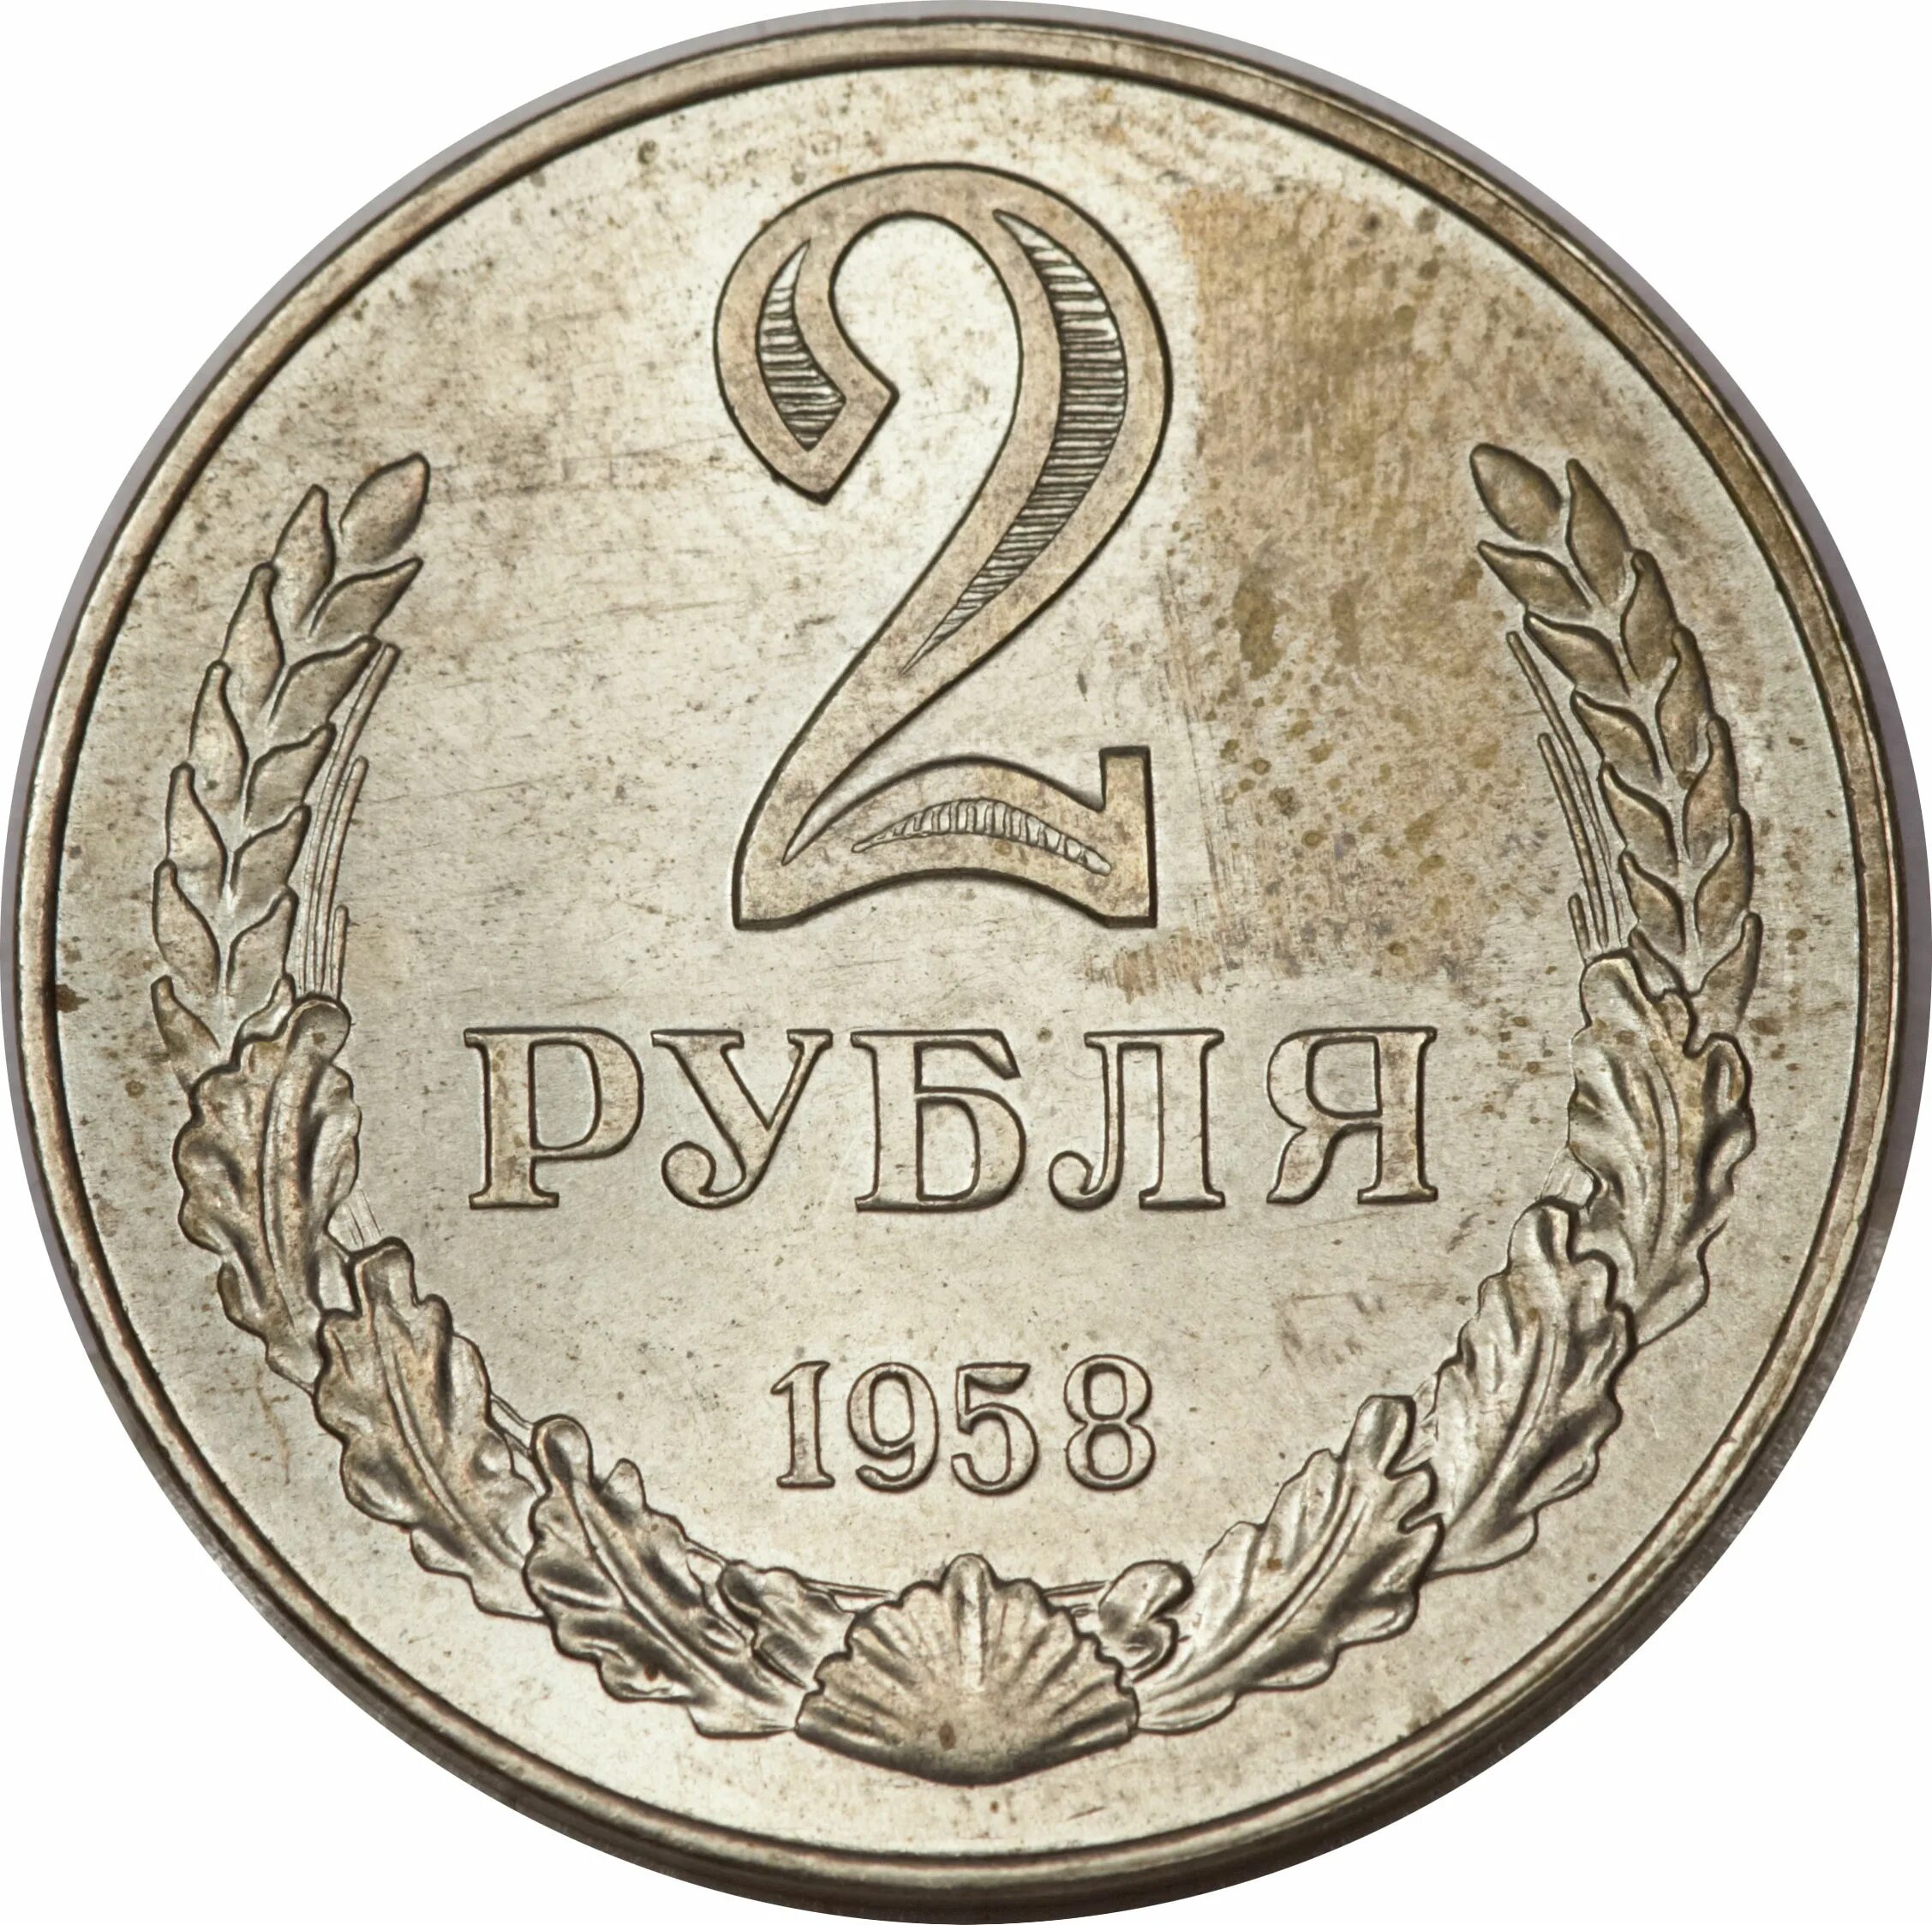 2 рубля 80 копеек. 2 Рубля СССР. Монета 2 рубля 1958. Советская монета 2 рубля. Два рубля советские.